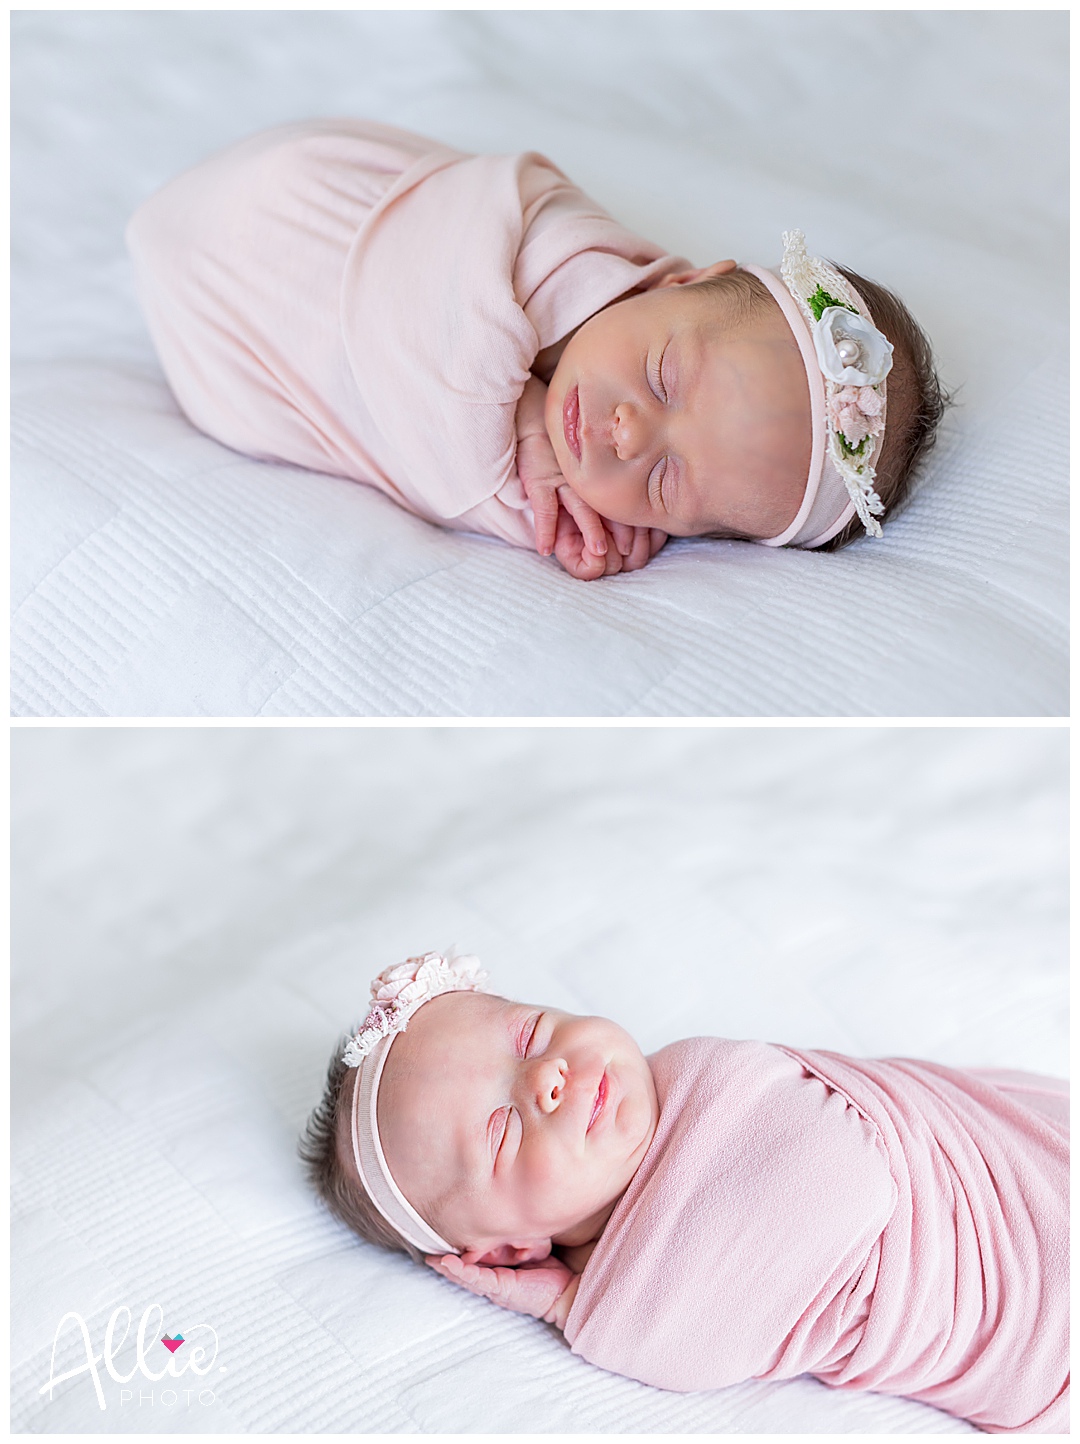 at-home baby girl newborn session,boston area newborn photographer,boston lifestyle family photographer,twin newborn girls,twin newborn photos,